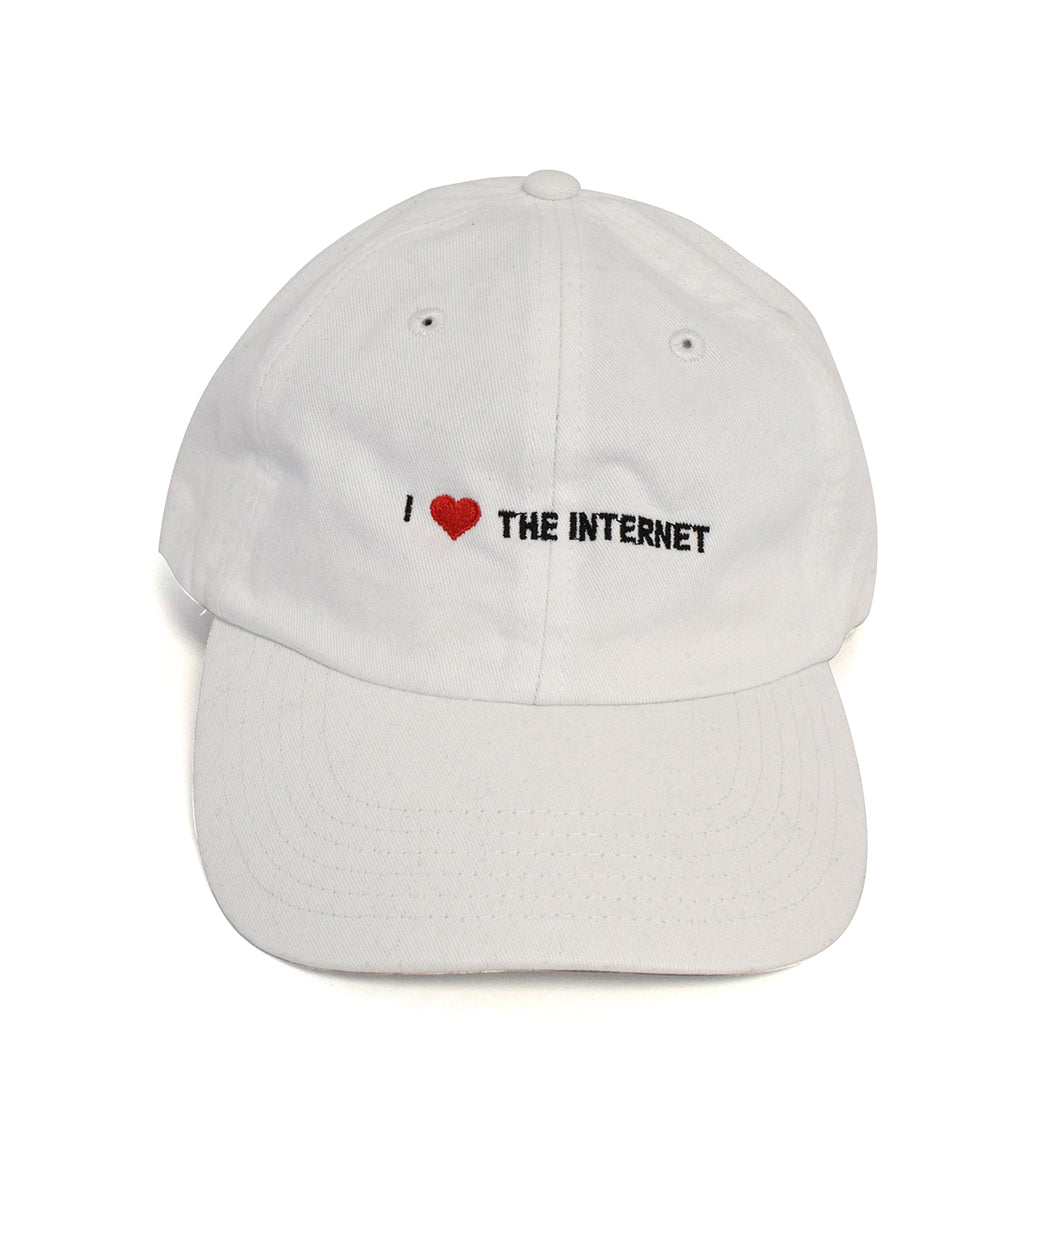 A white baseball cap with the phrase 